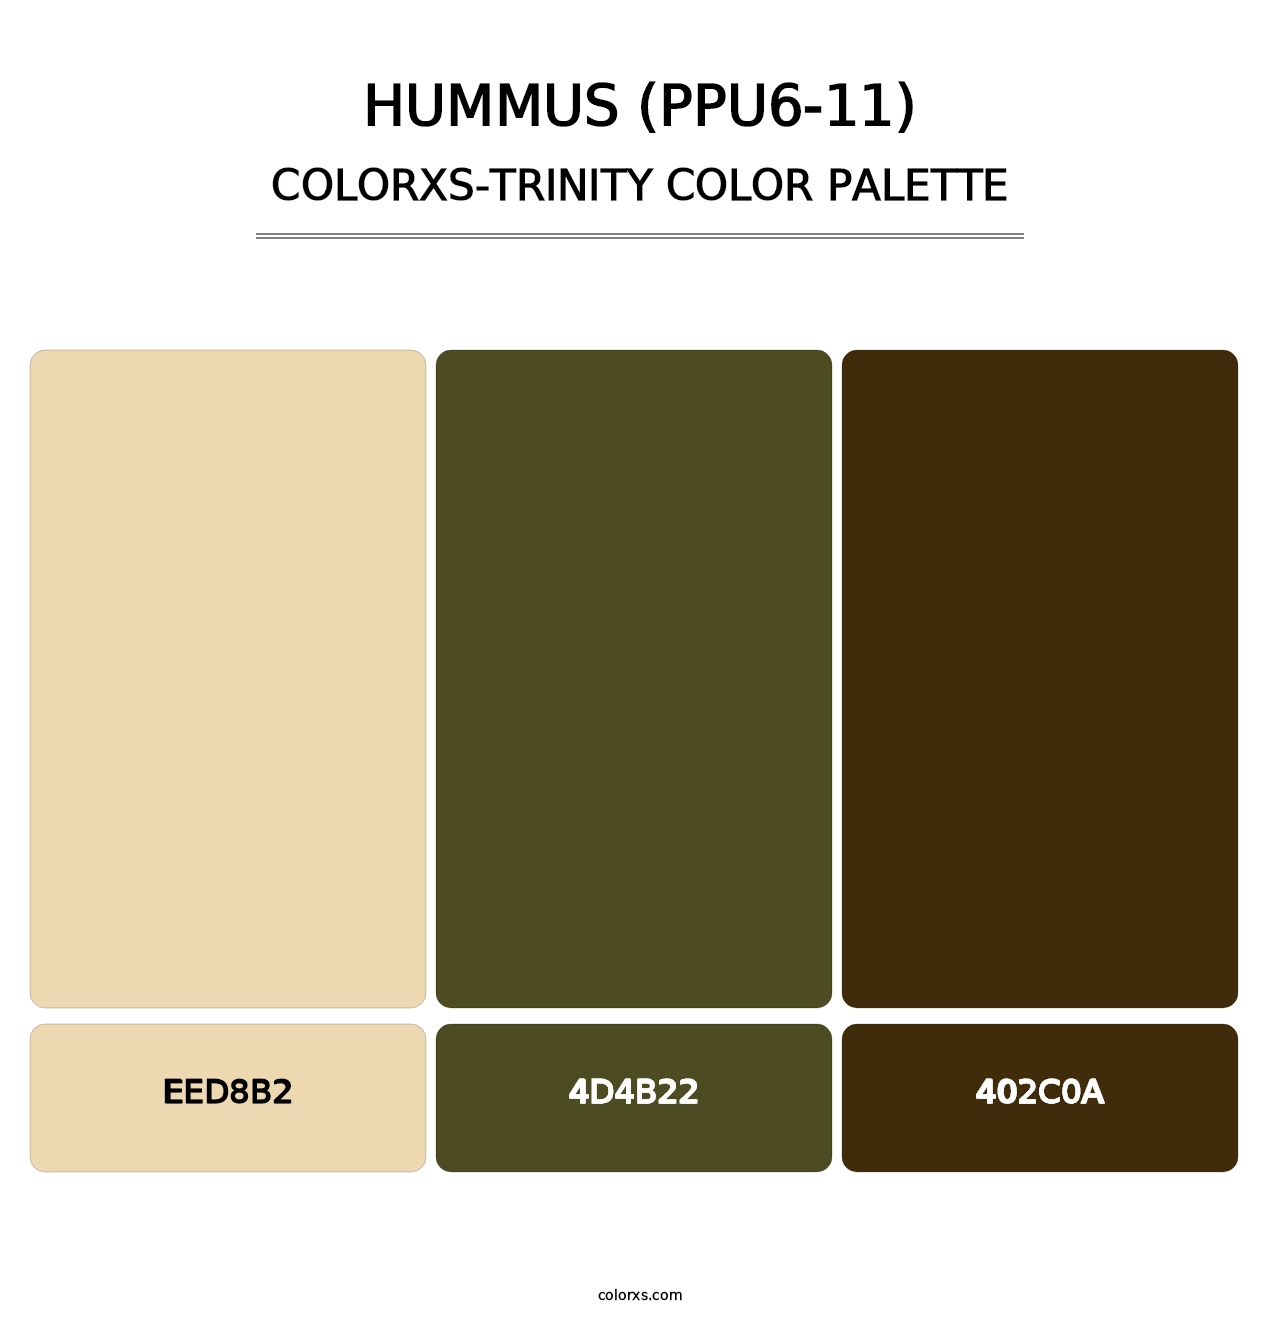 Hummus (PPU6-11) - Colorxs Trinity Palette